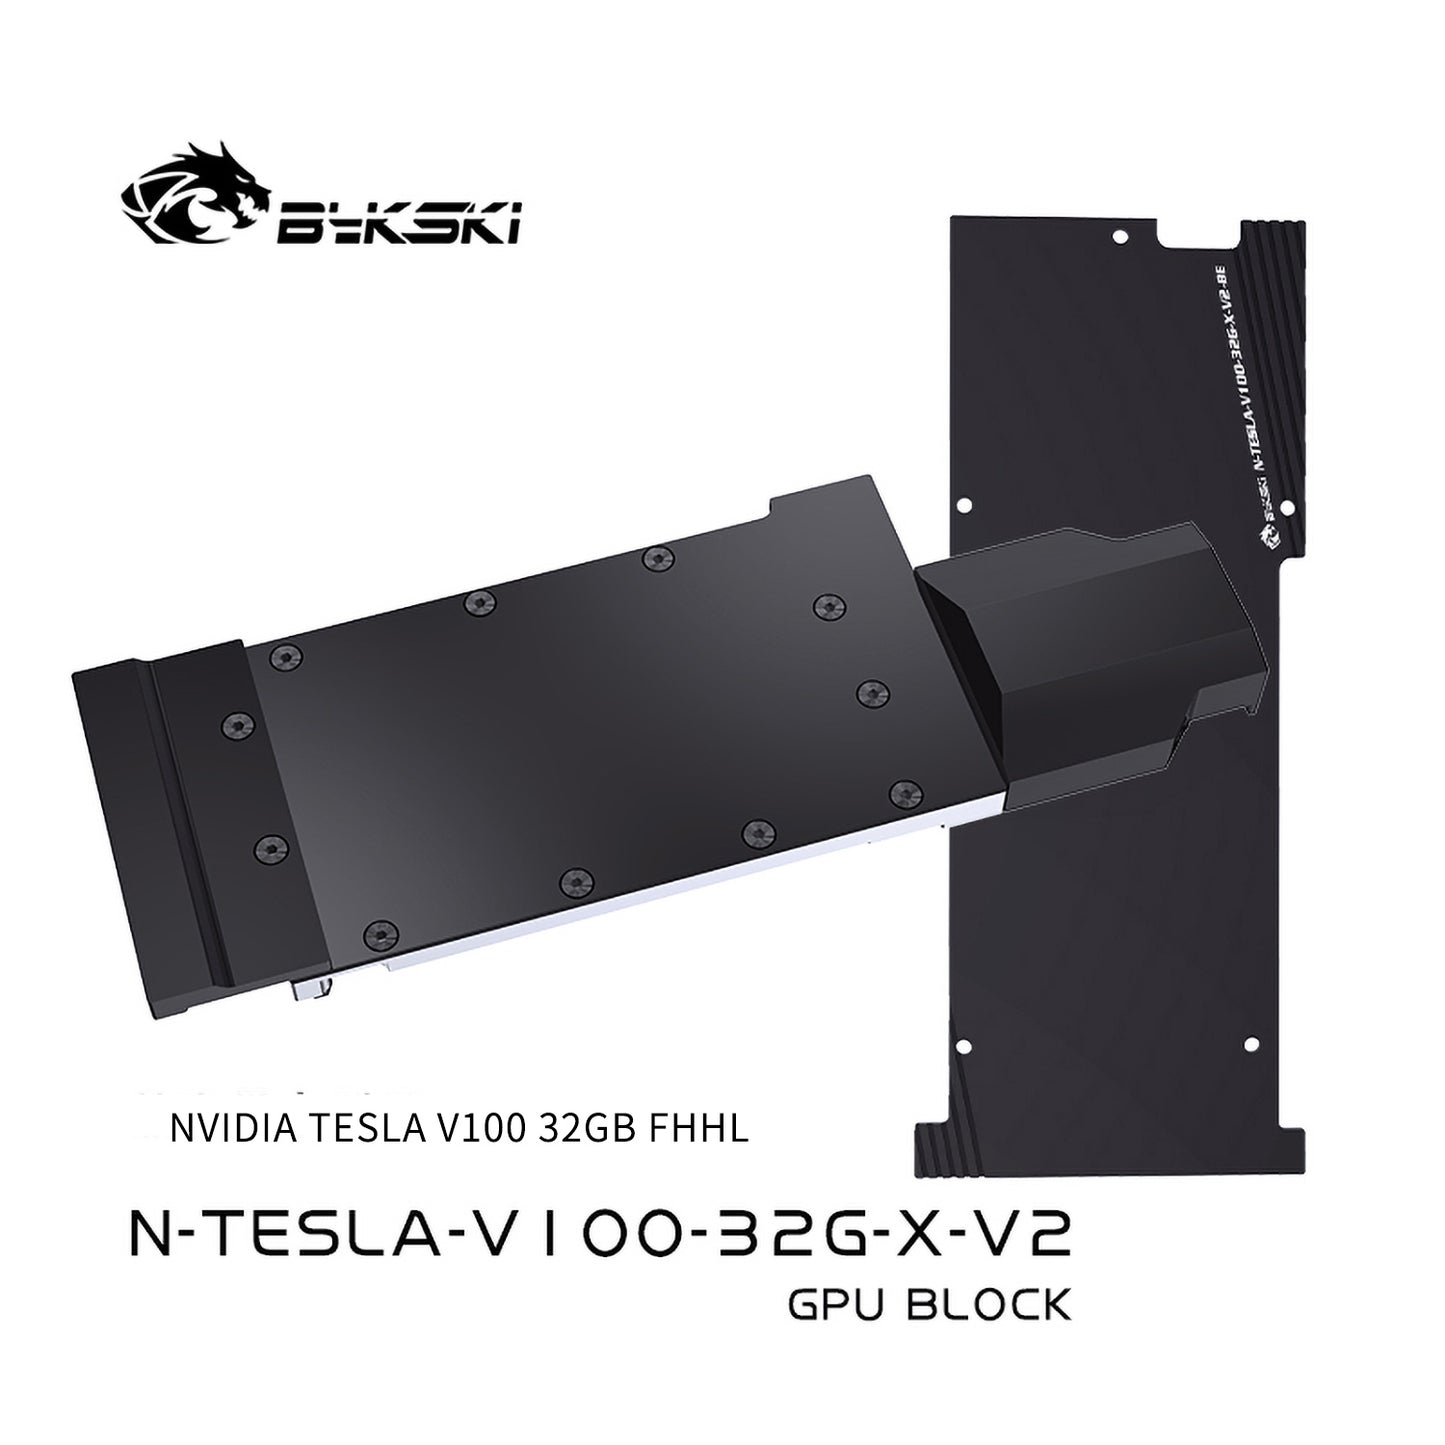 Bykski GPU Block For Nvidia Tesla V100 32GB FHHL, High Heat Resistance Material POM + Full Metal Construction, With Backplate Full Cover GPU Water Cooling Cooler Radiator Block N-TESLA-V100-32G-X-V2